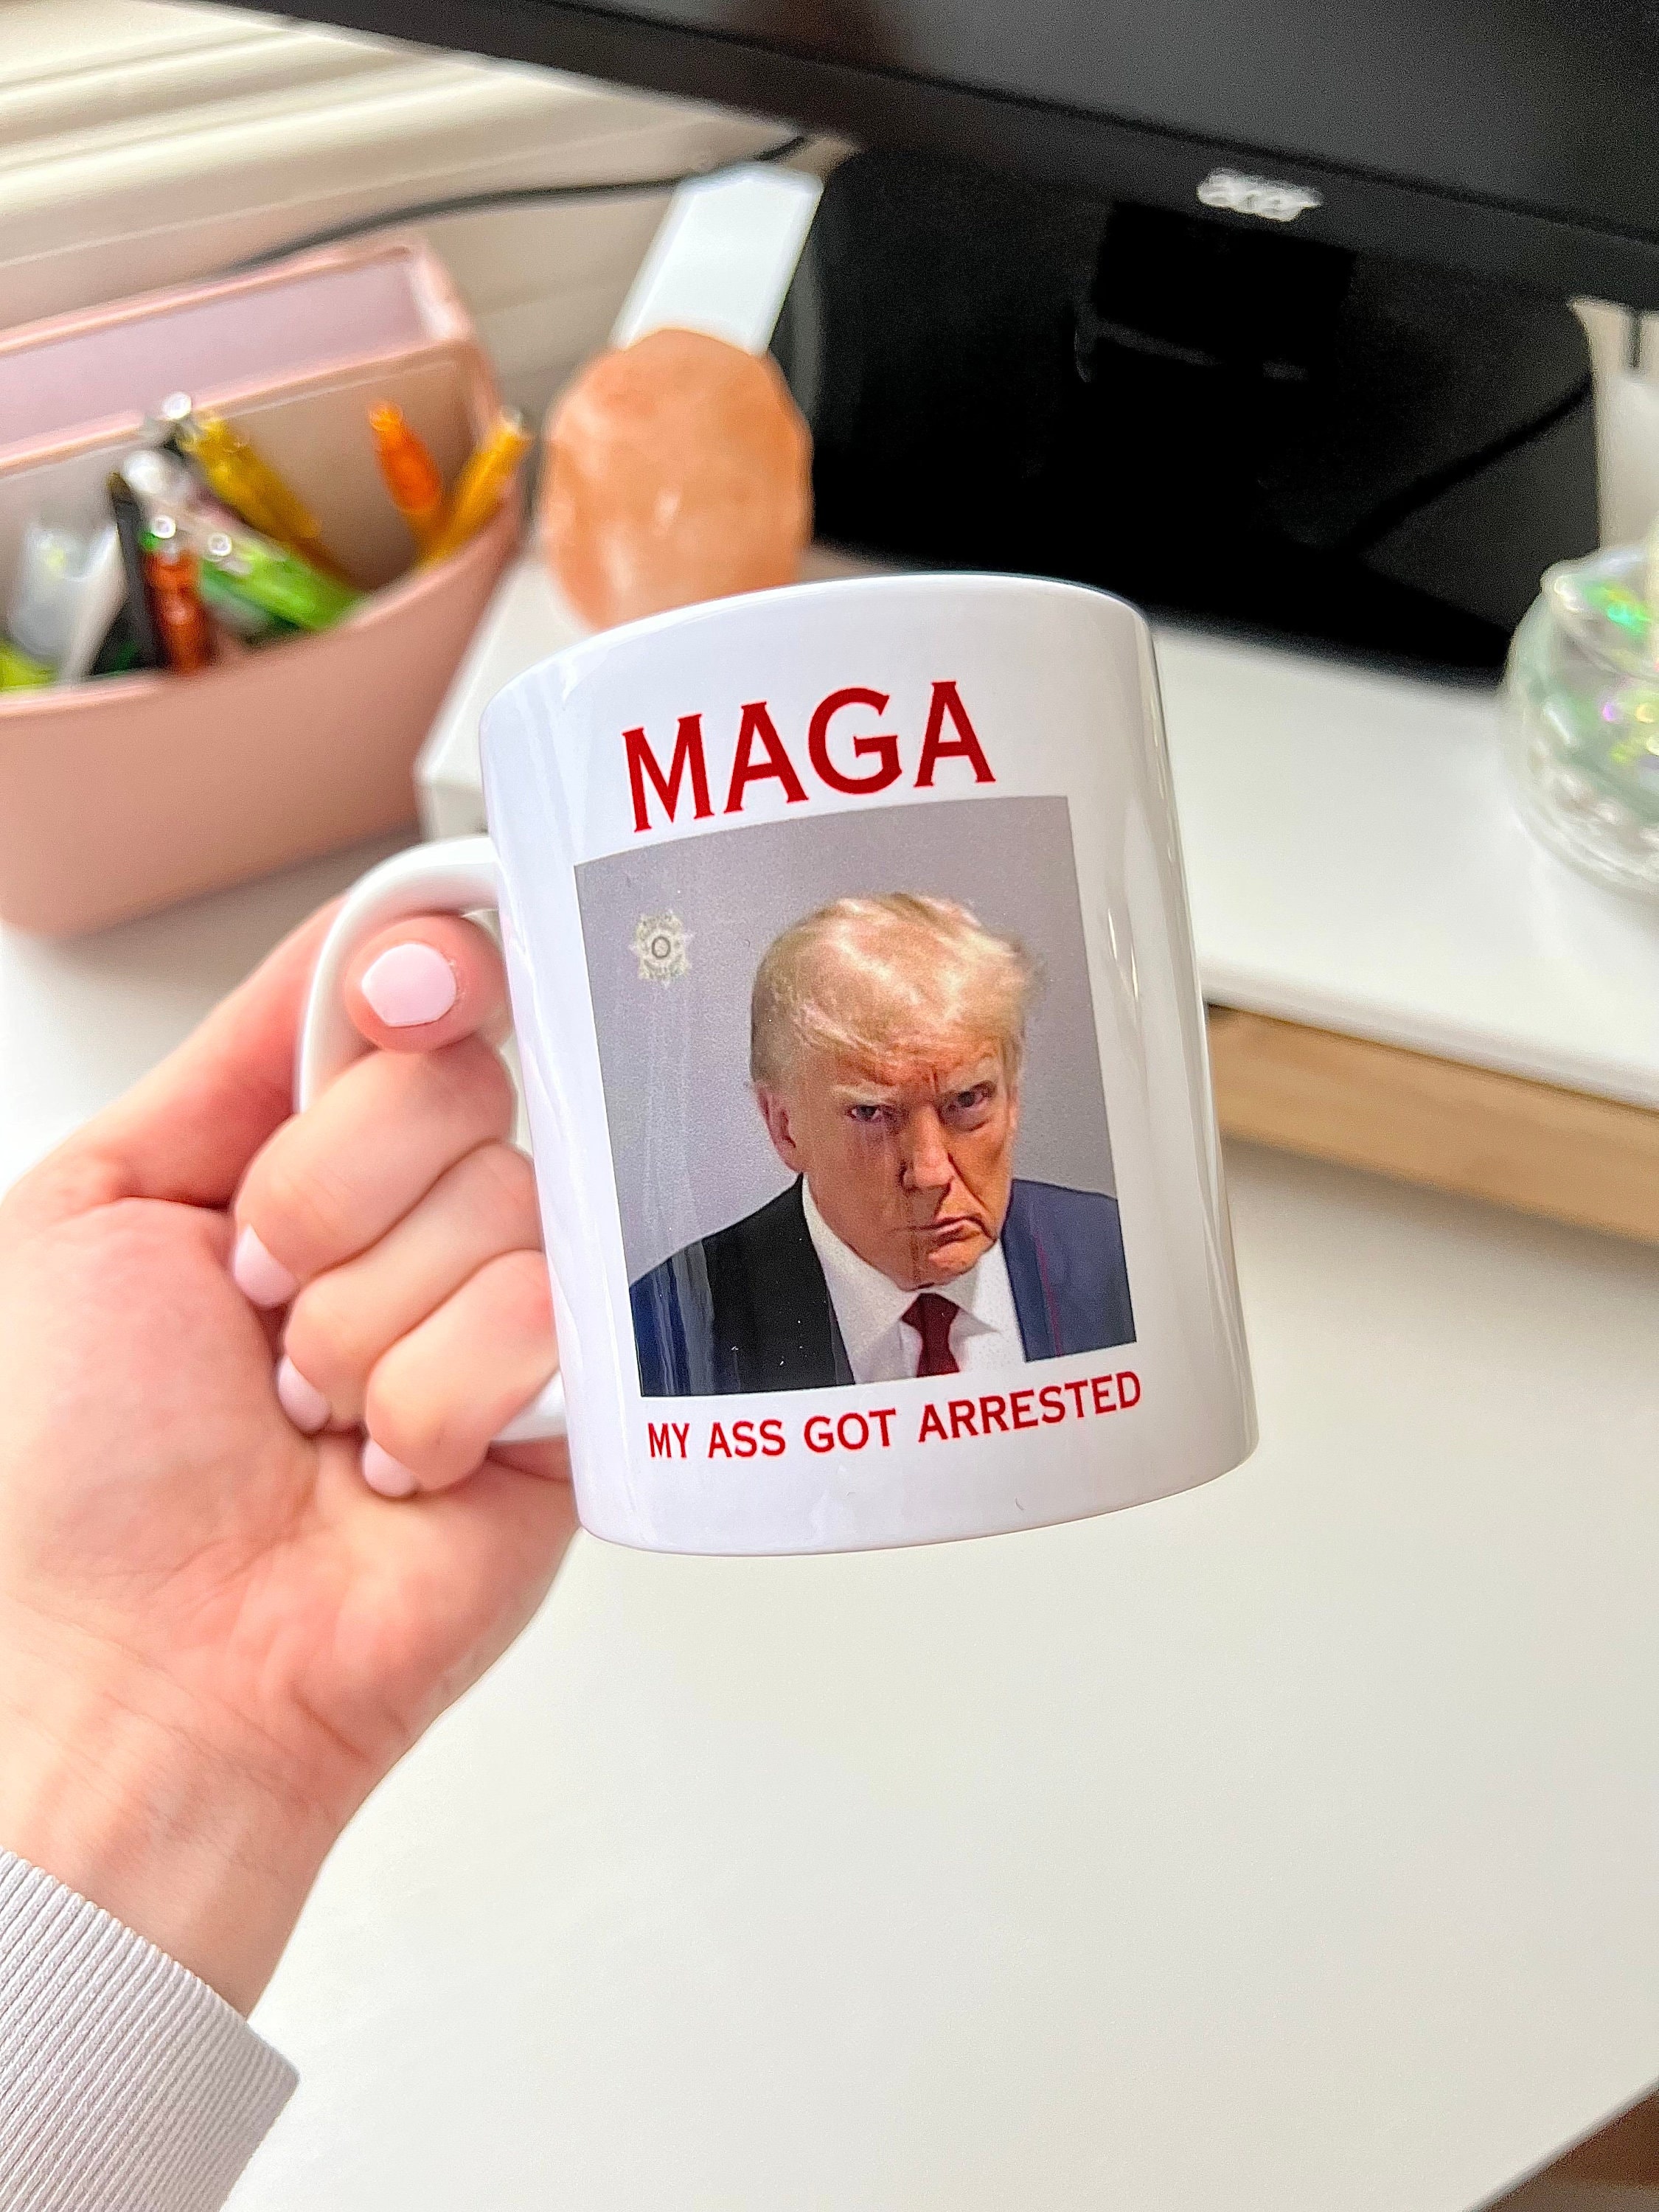 Rogue River Tactical Donald Trump 2024 Coffee Mug Save America Again Trump  2024 Novelty Cup Presiden…See more Rogue River Tactical Donald Trump 2024